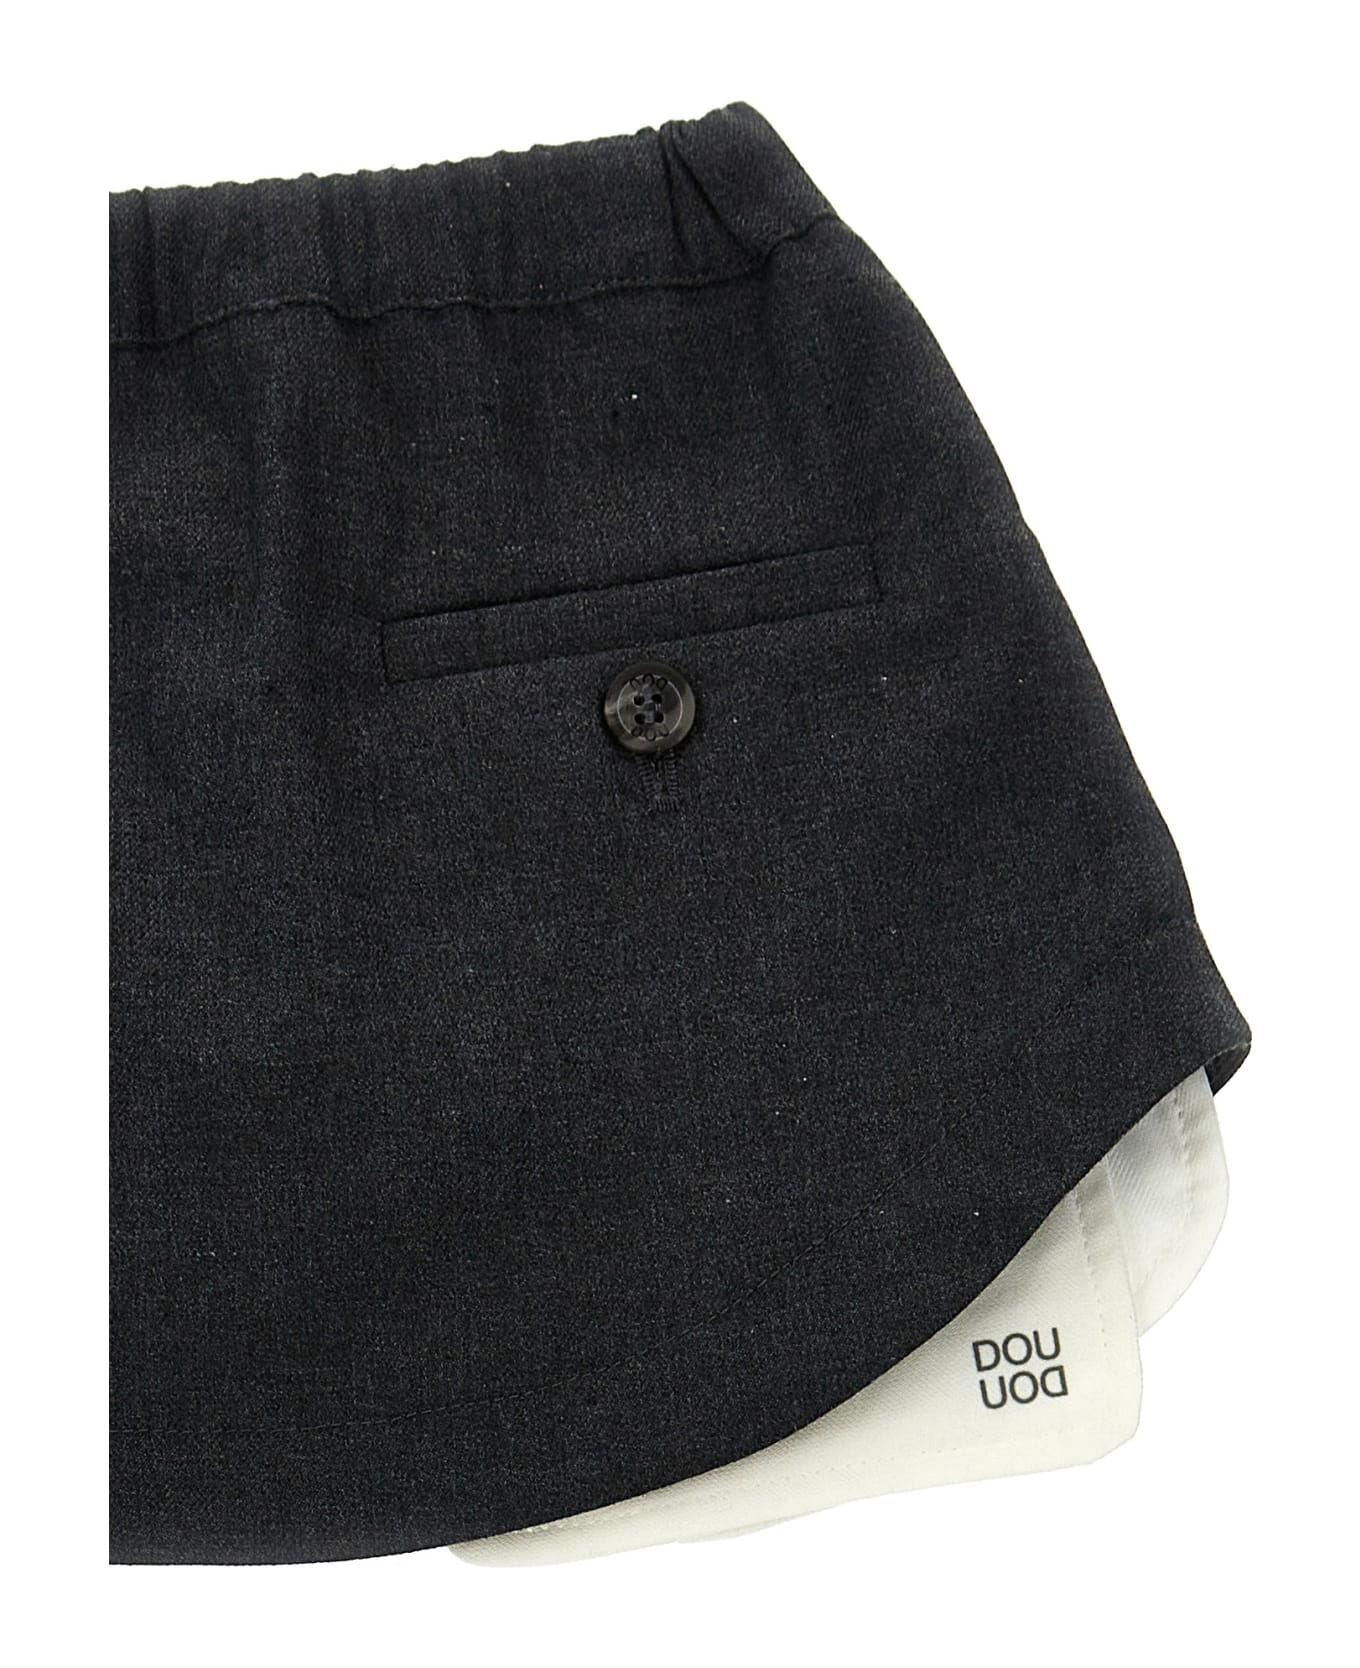 Douuod Mini Pocket Skirt - Gray